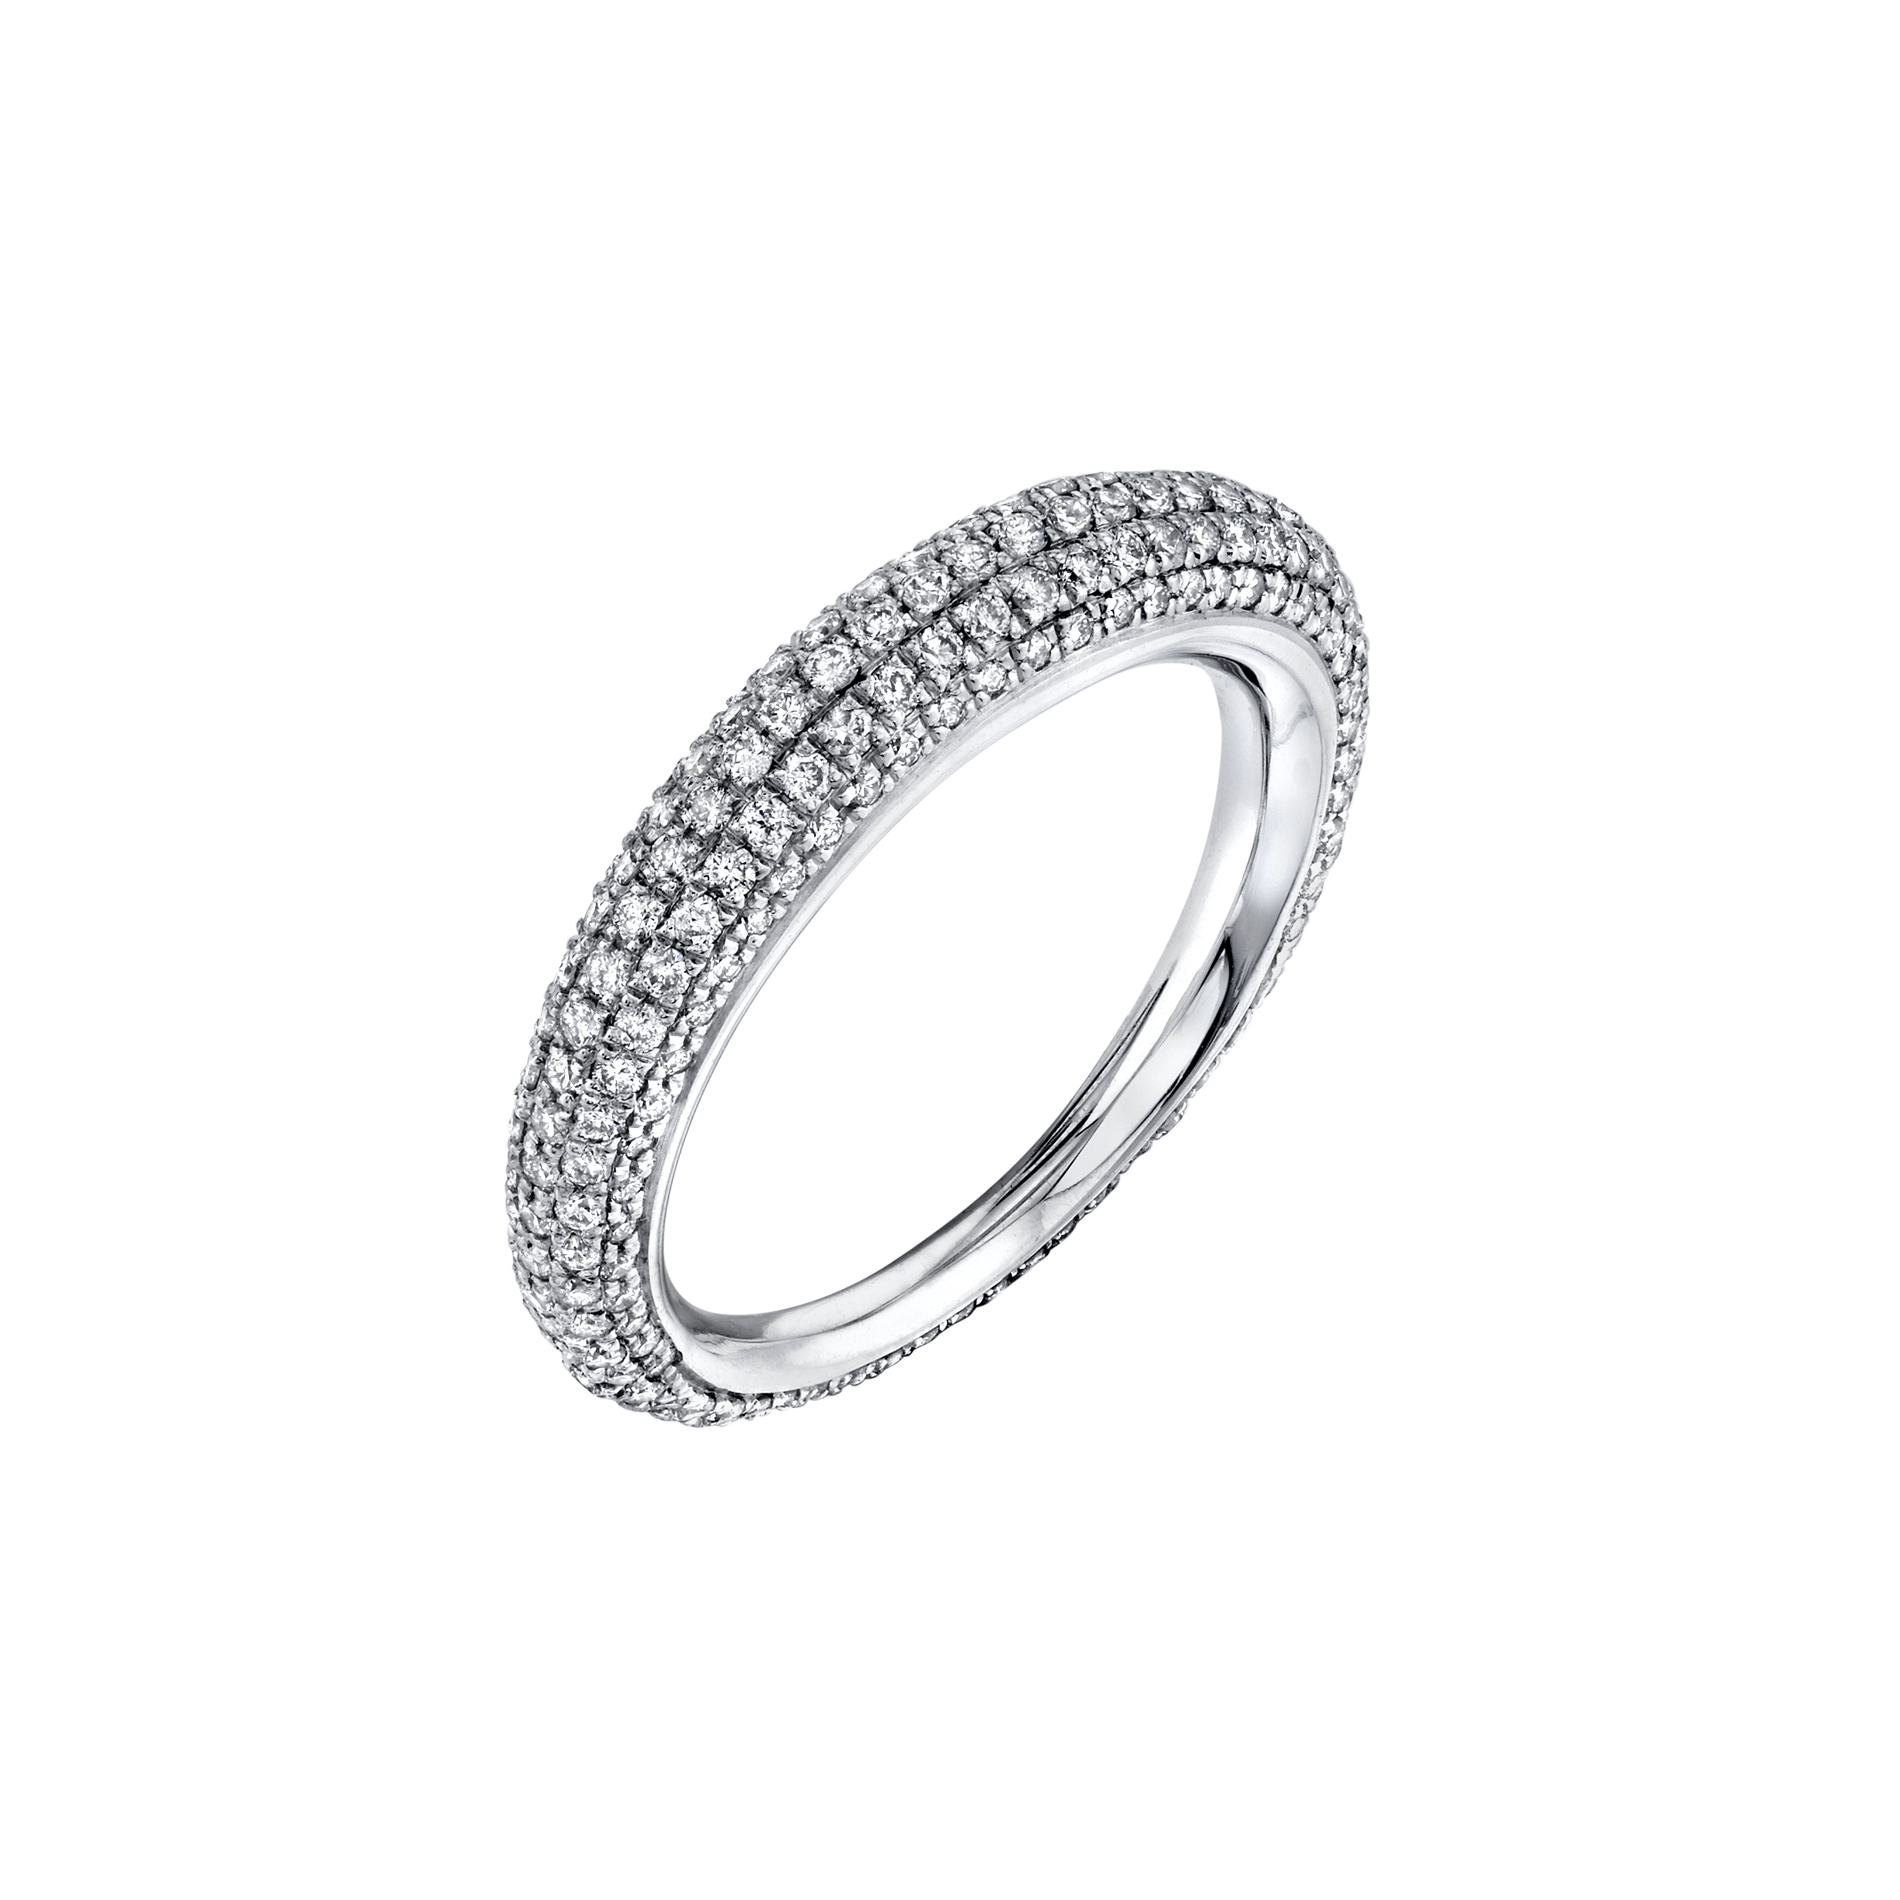 Rising Tusk Ring with Full White Pavé Diamonds - Gabriela Artigas